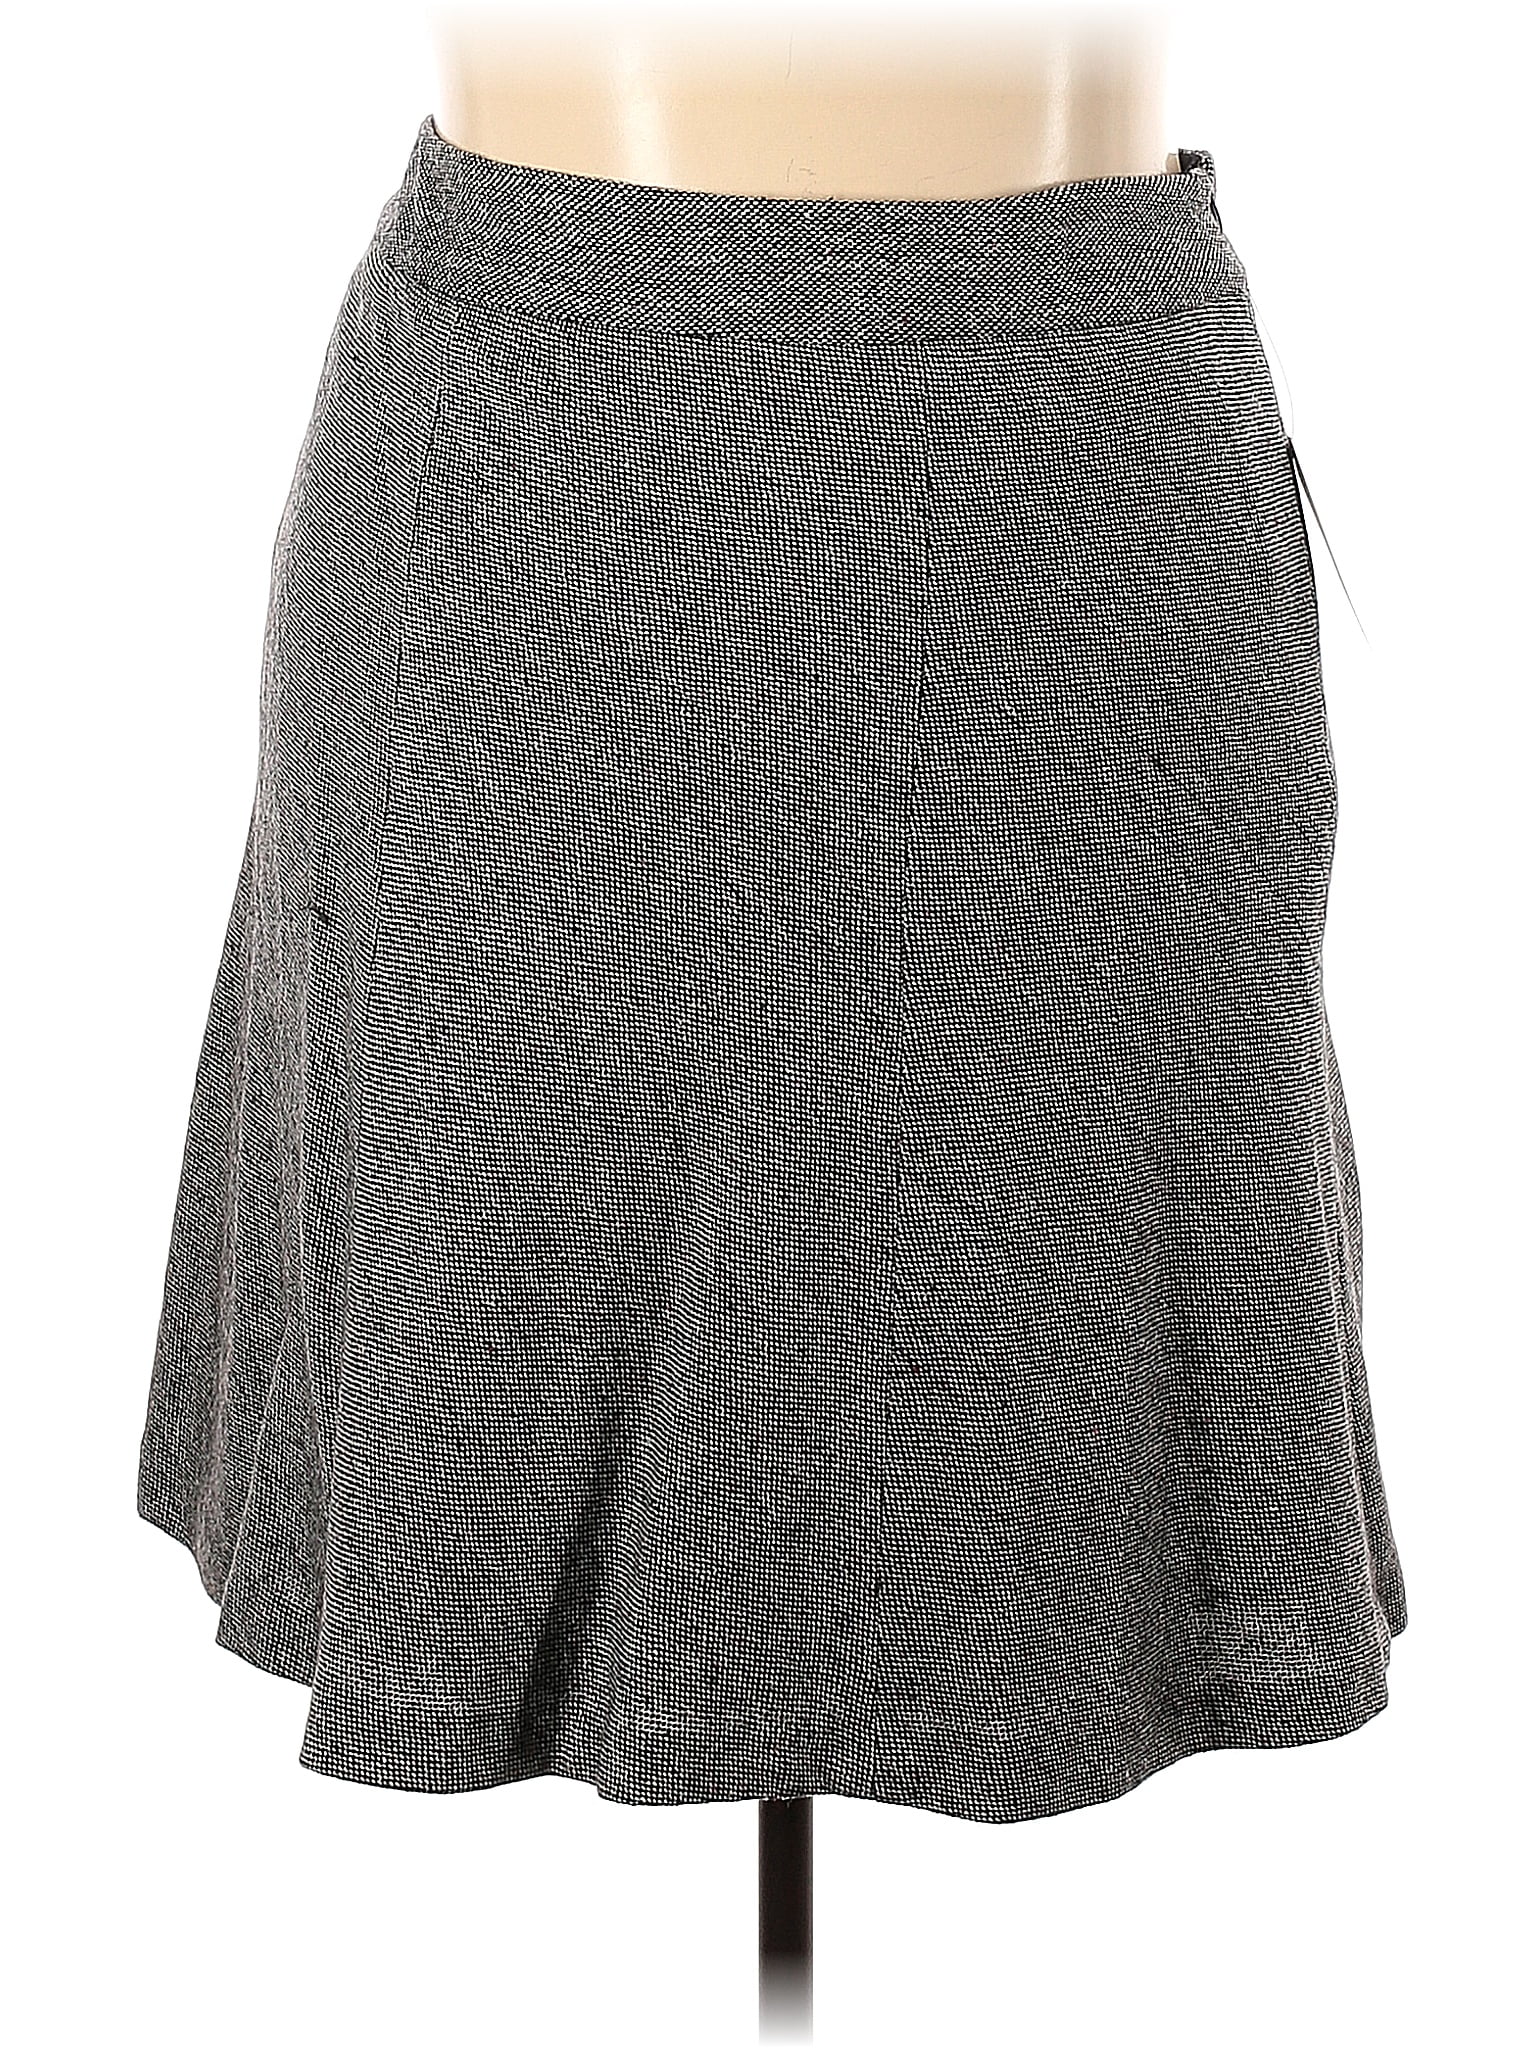 Merona Gray Casual Skirt Size 18 (Plus) - 51% off | thredUP